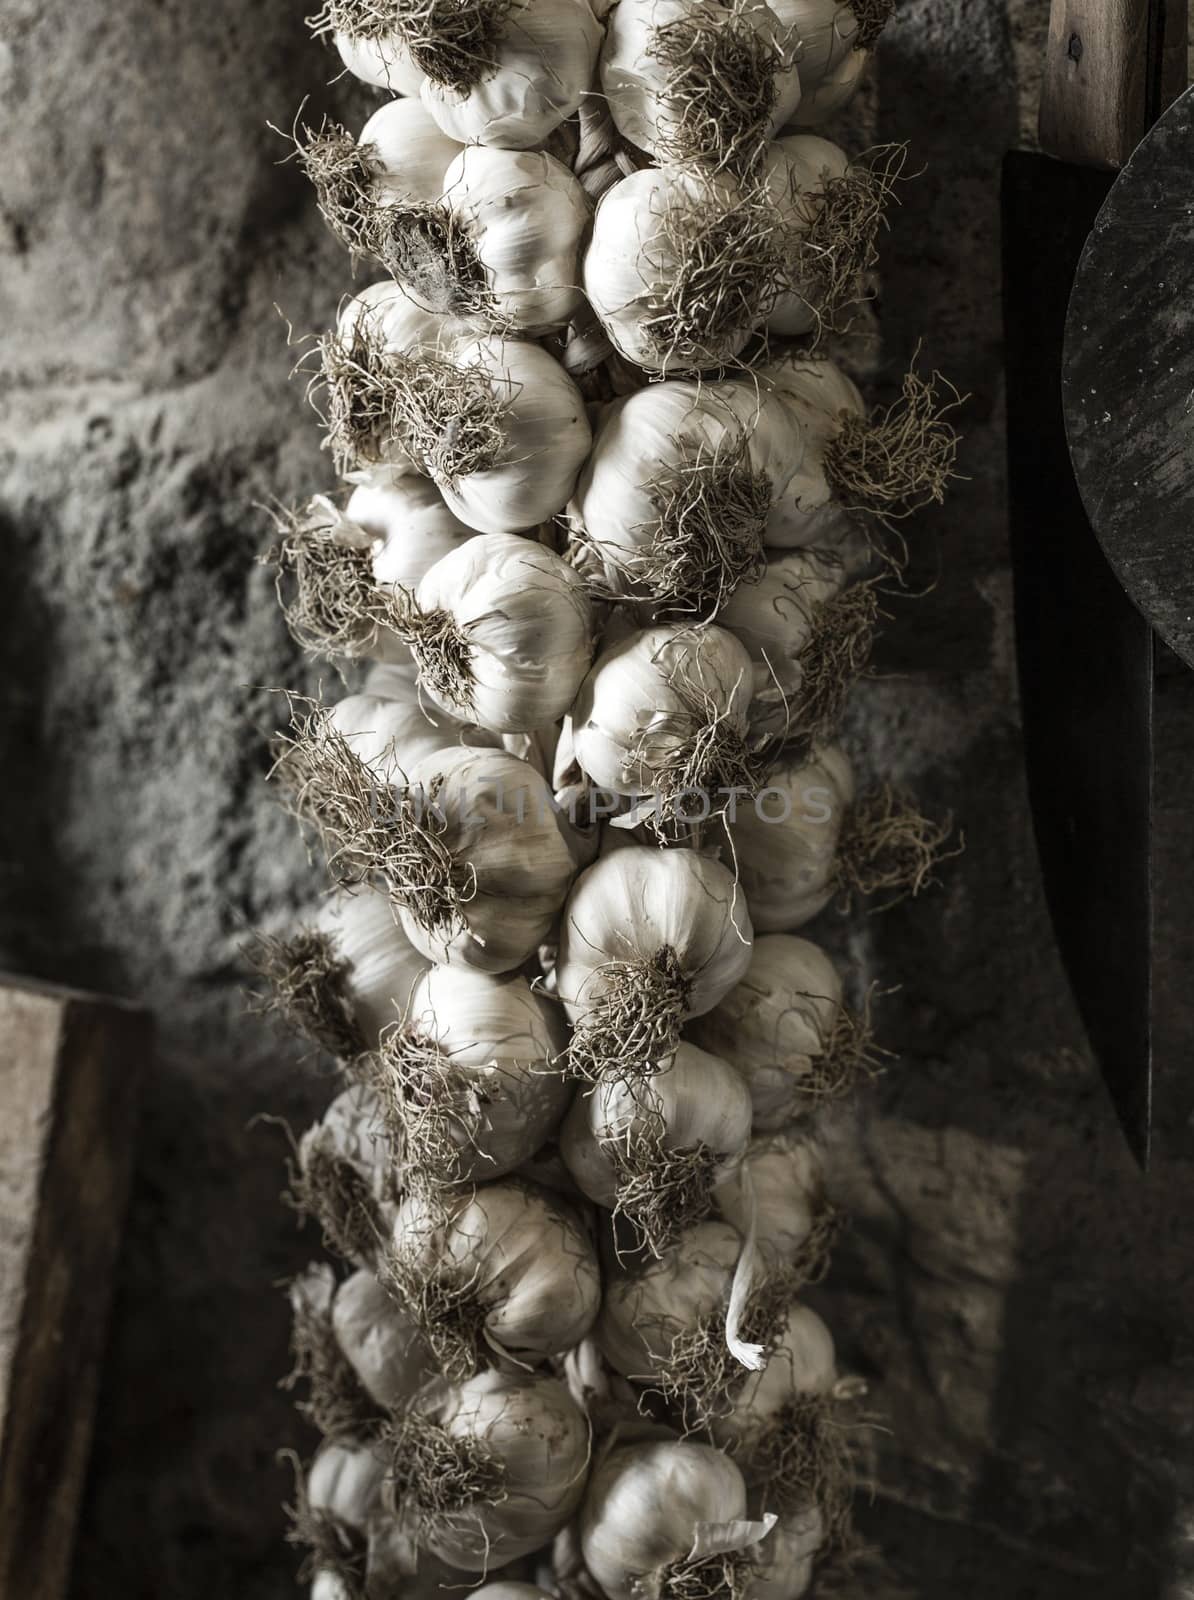 Garlic by Onigiristudio